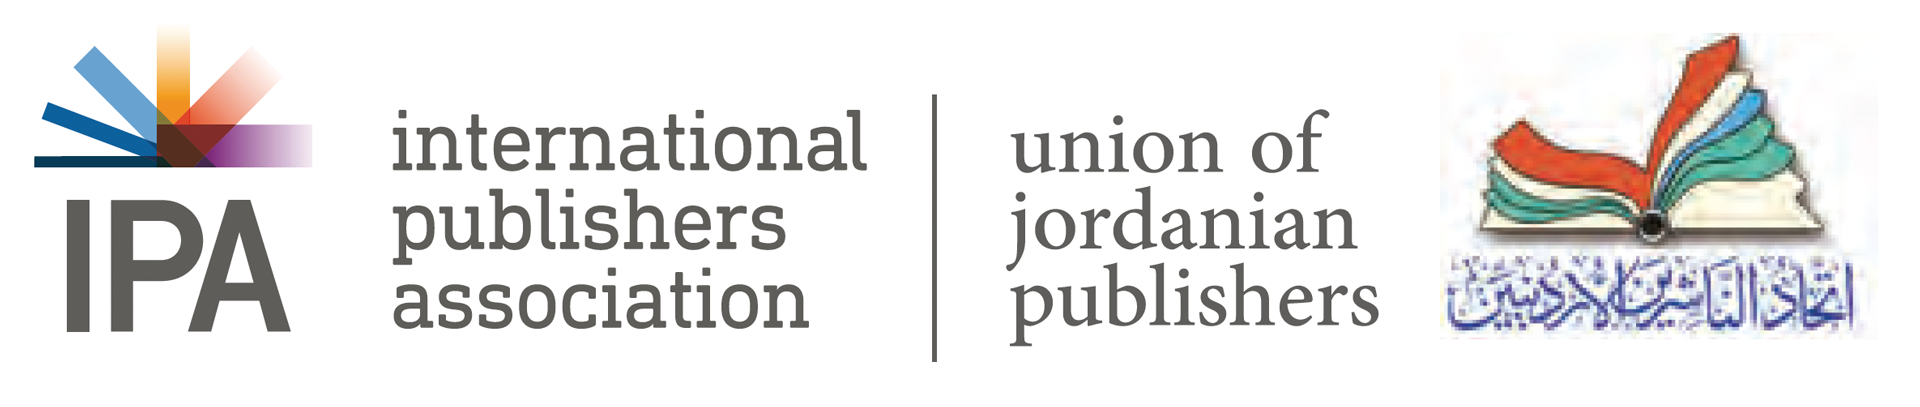 IPA, Union of Jordanian Publishers